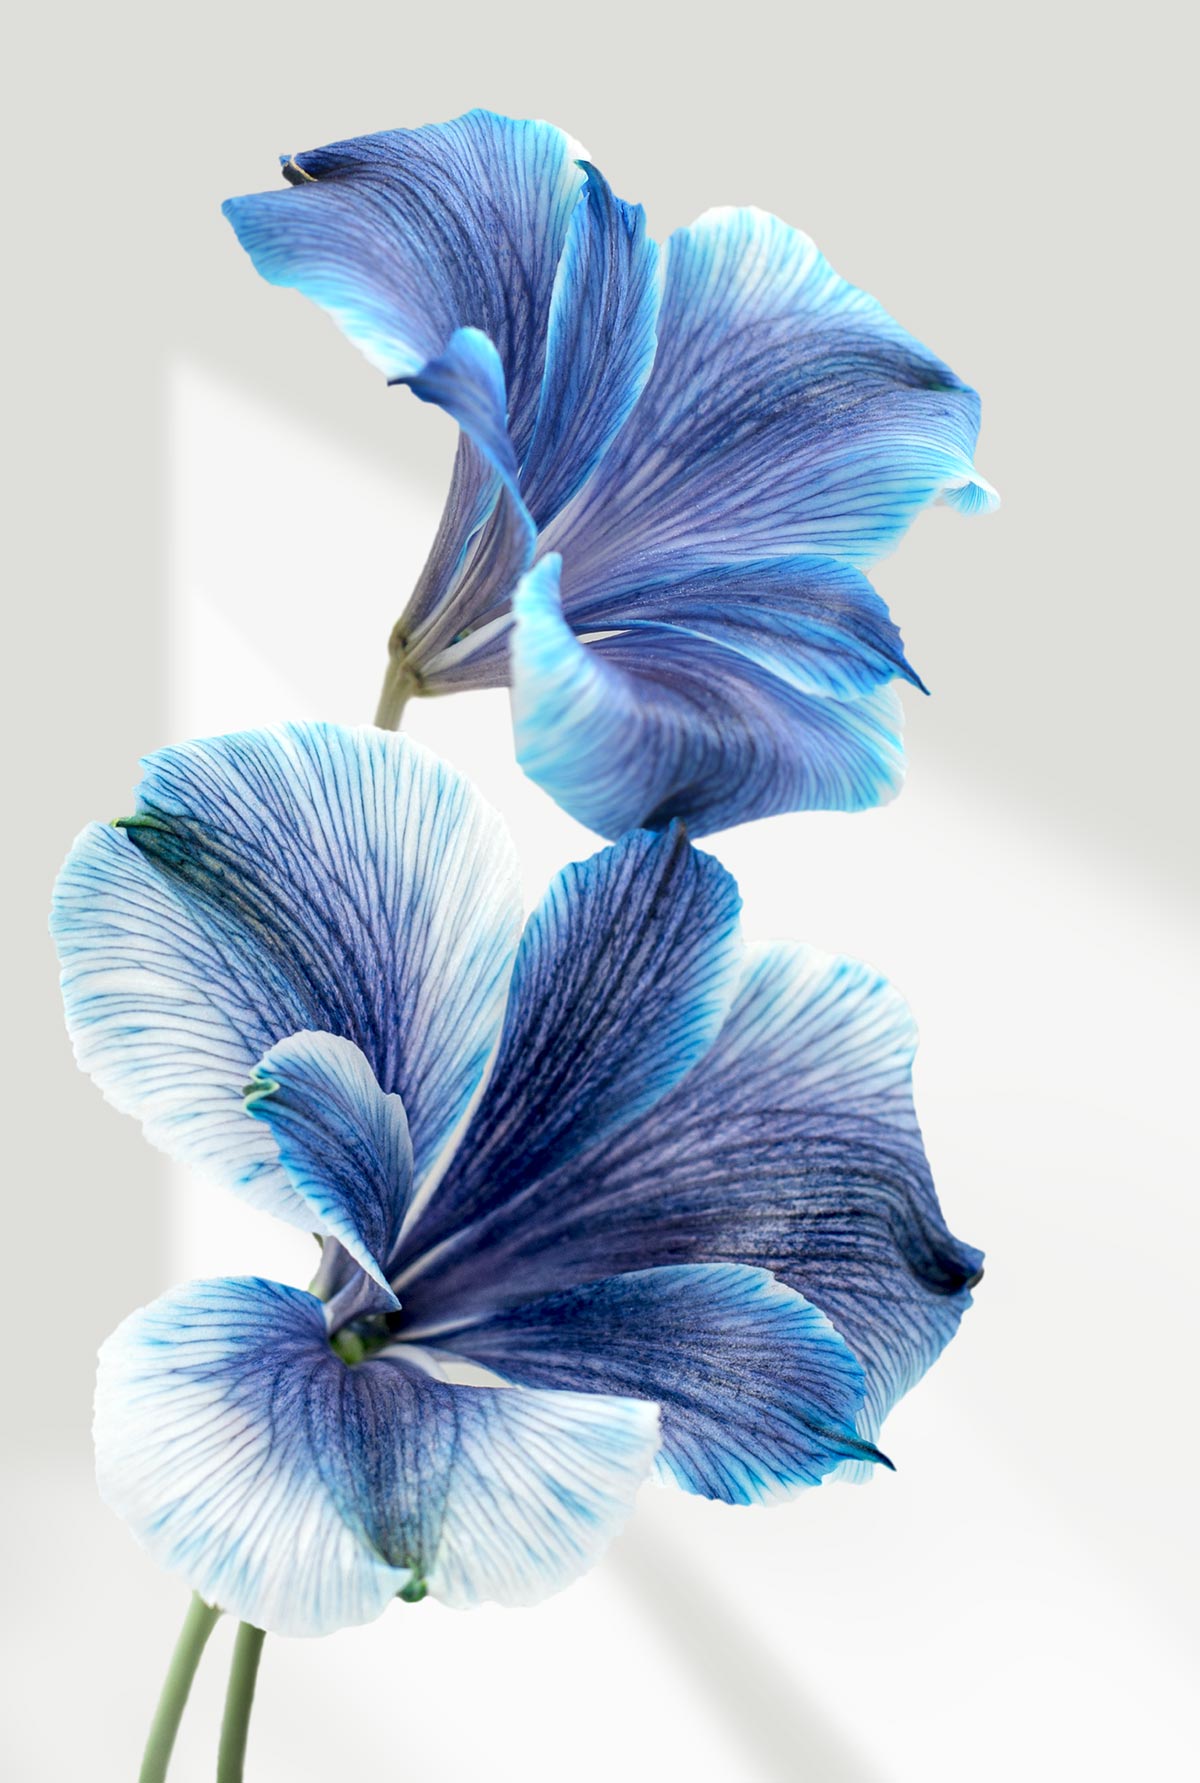 Blue Morning Glory 3D Effect Flower Wallpaper Home Decor